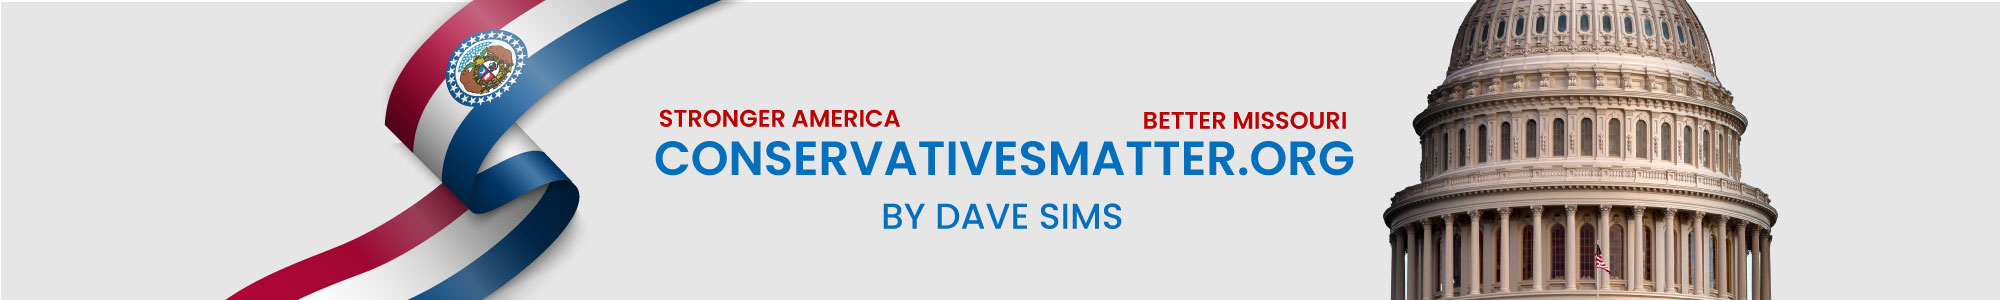 conservativesmatter.org logo